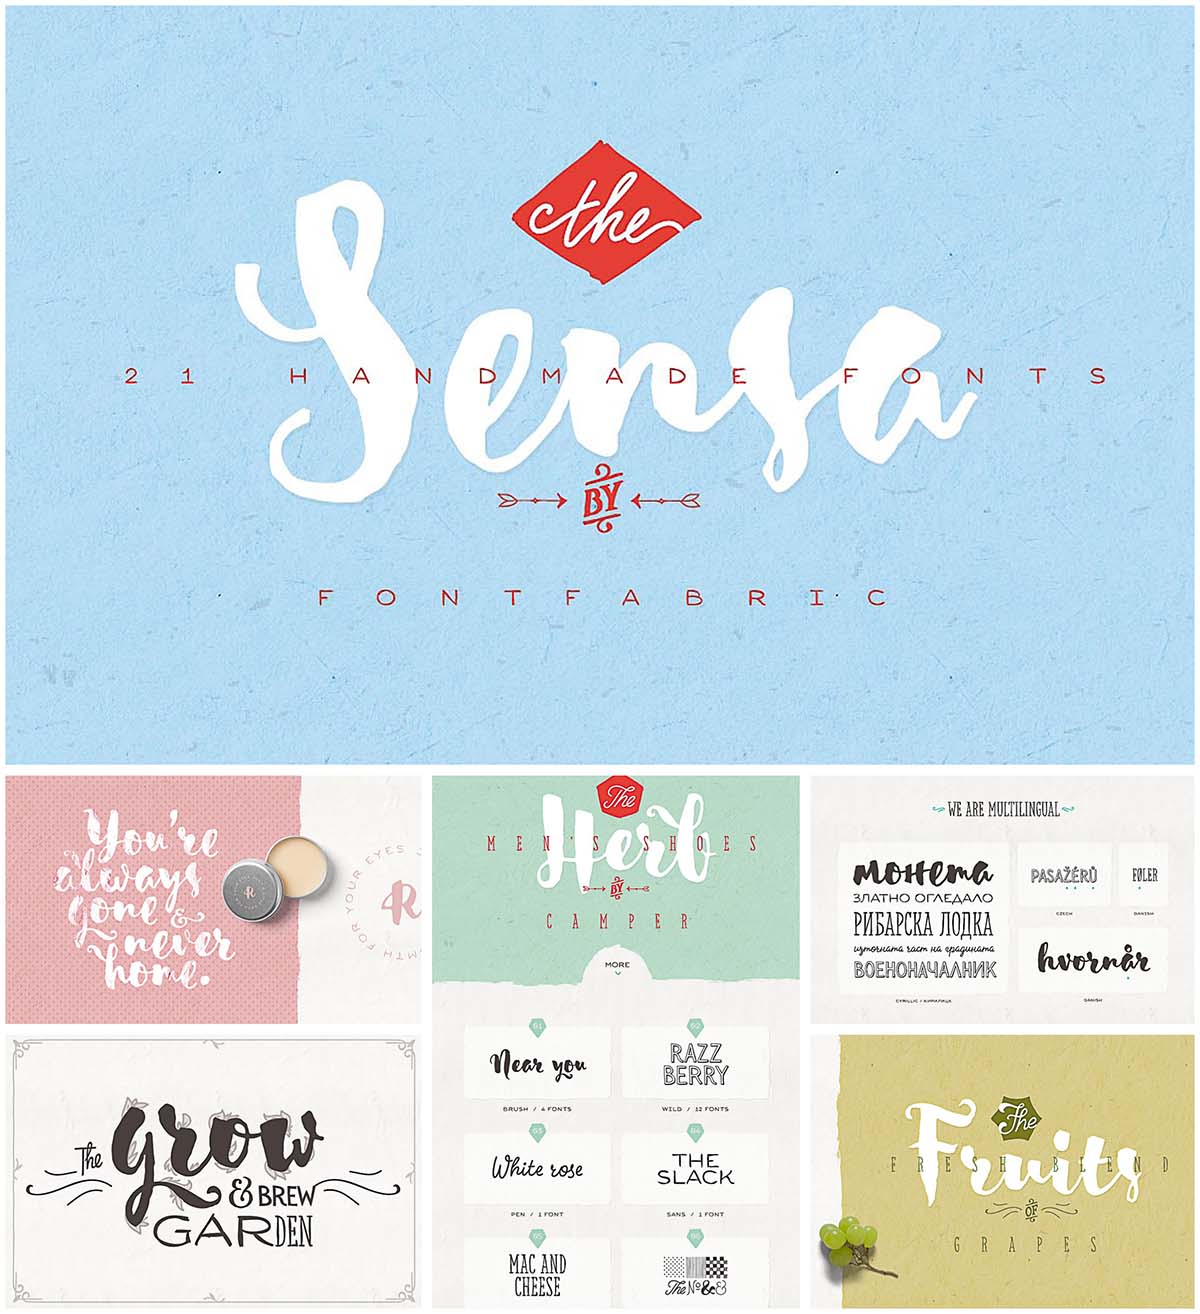 Sensa font family with cyrillic typeface